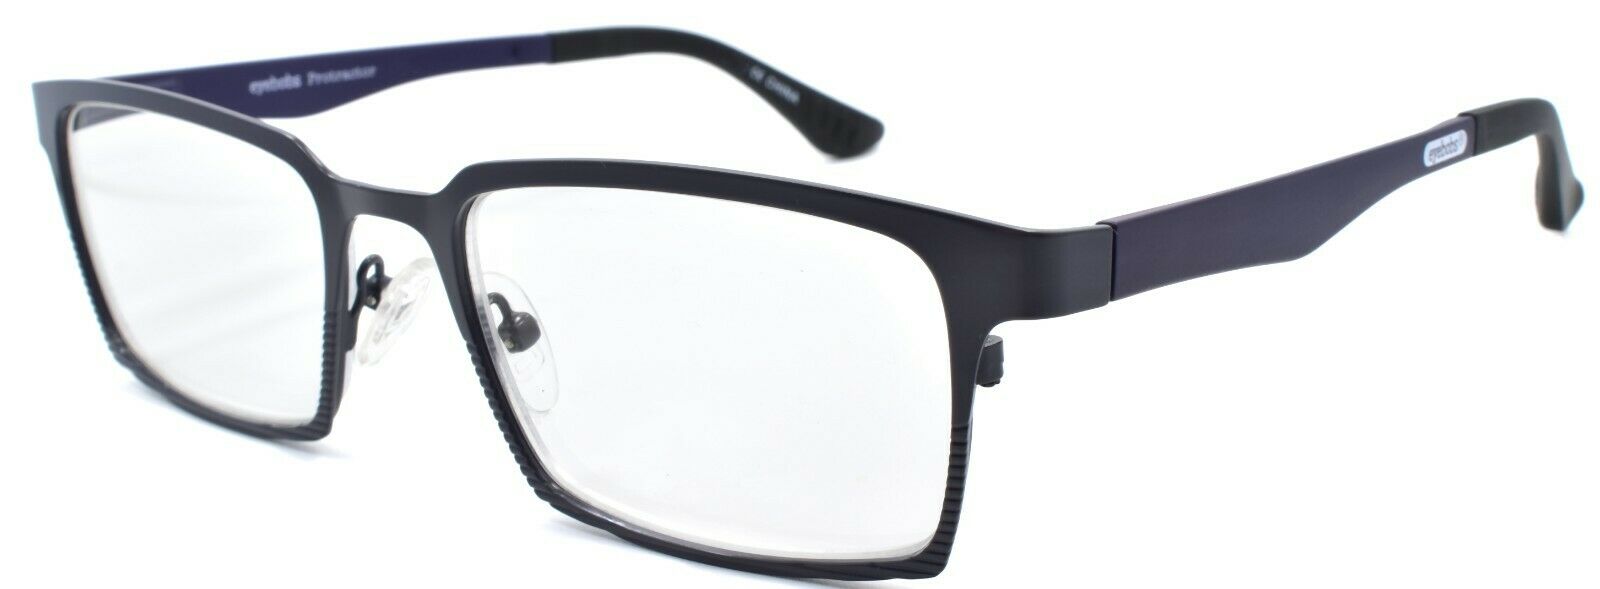 1-Eyebobs Protractor 905 02 Reading Glasses Gunmetal / Blue +2.00-842446045074-IKSpecs